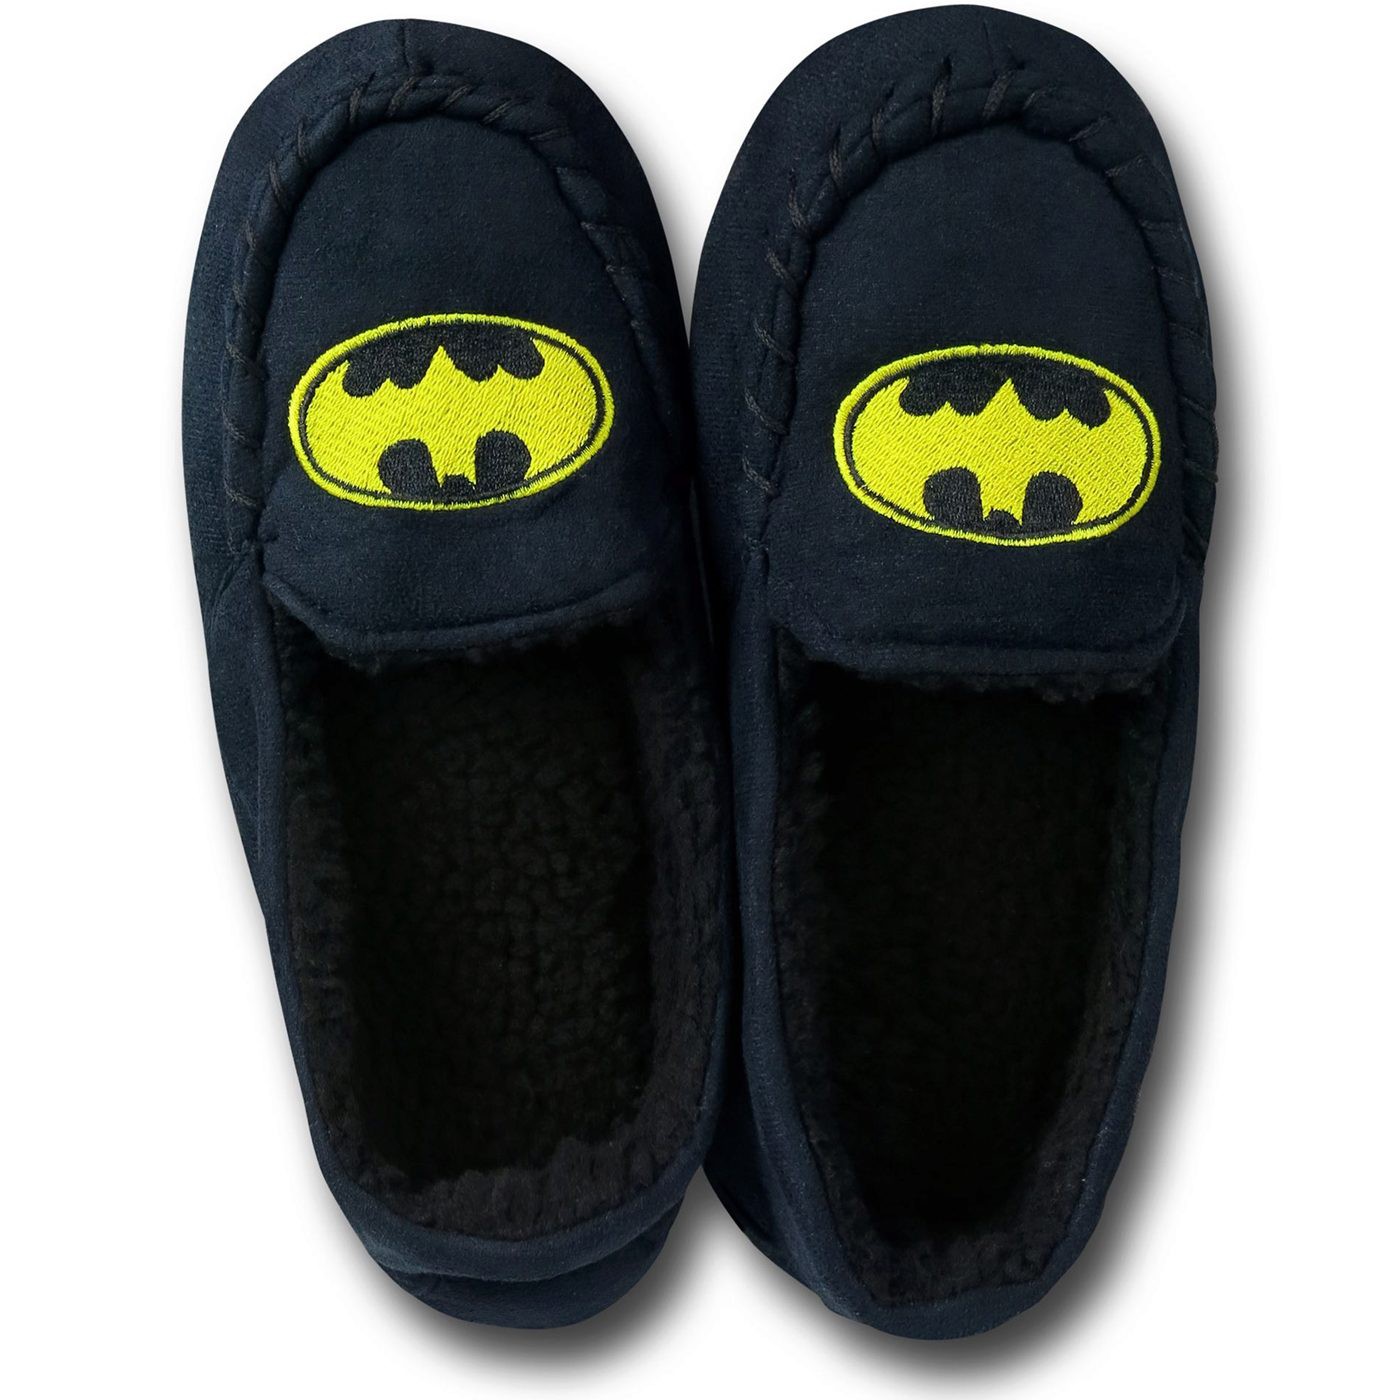 Batman Moccasin Slippers